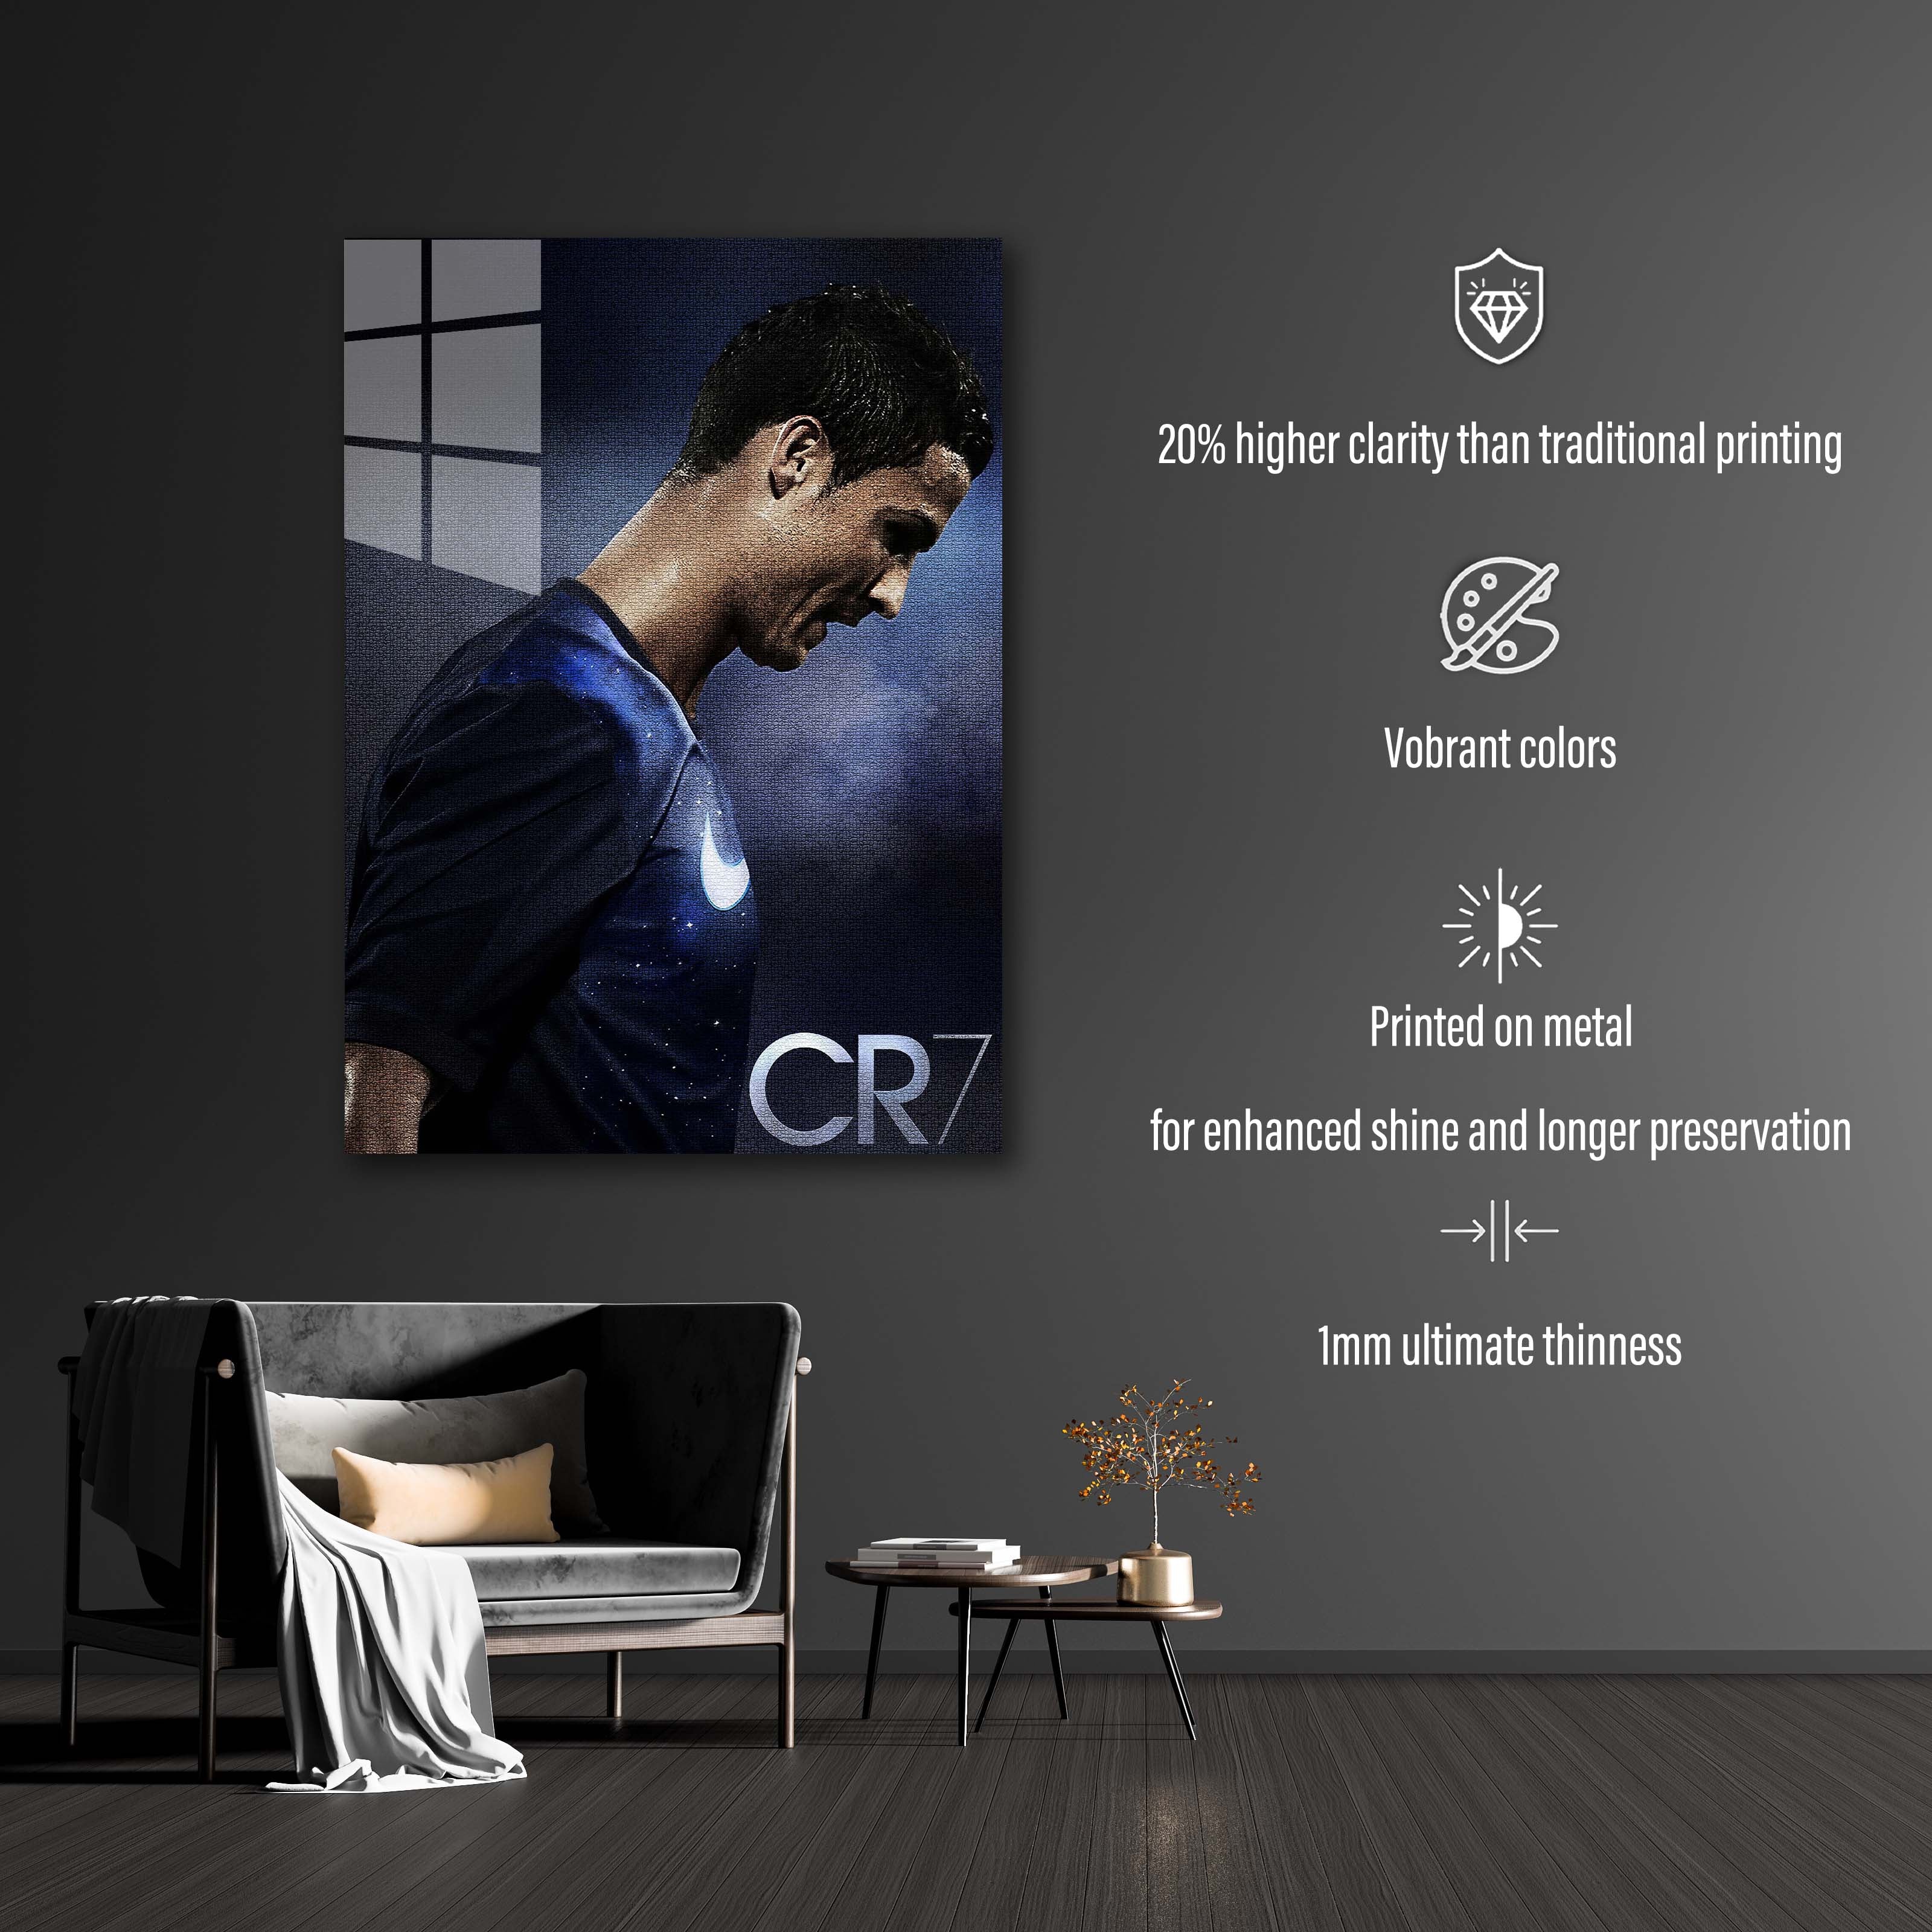 Cr7 Ronaldo-designed by @DynCreative